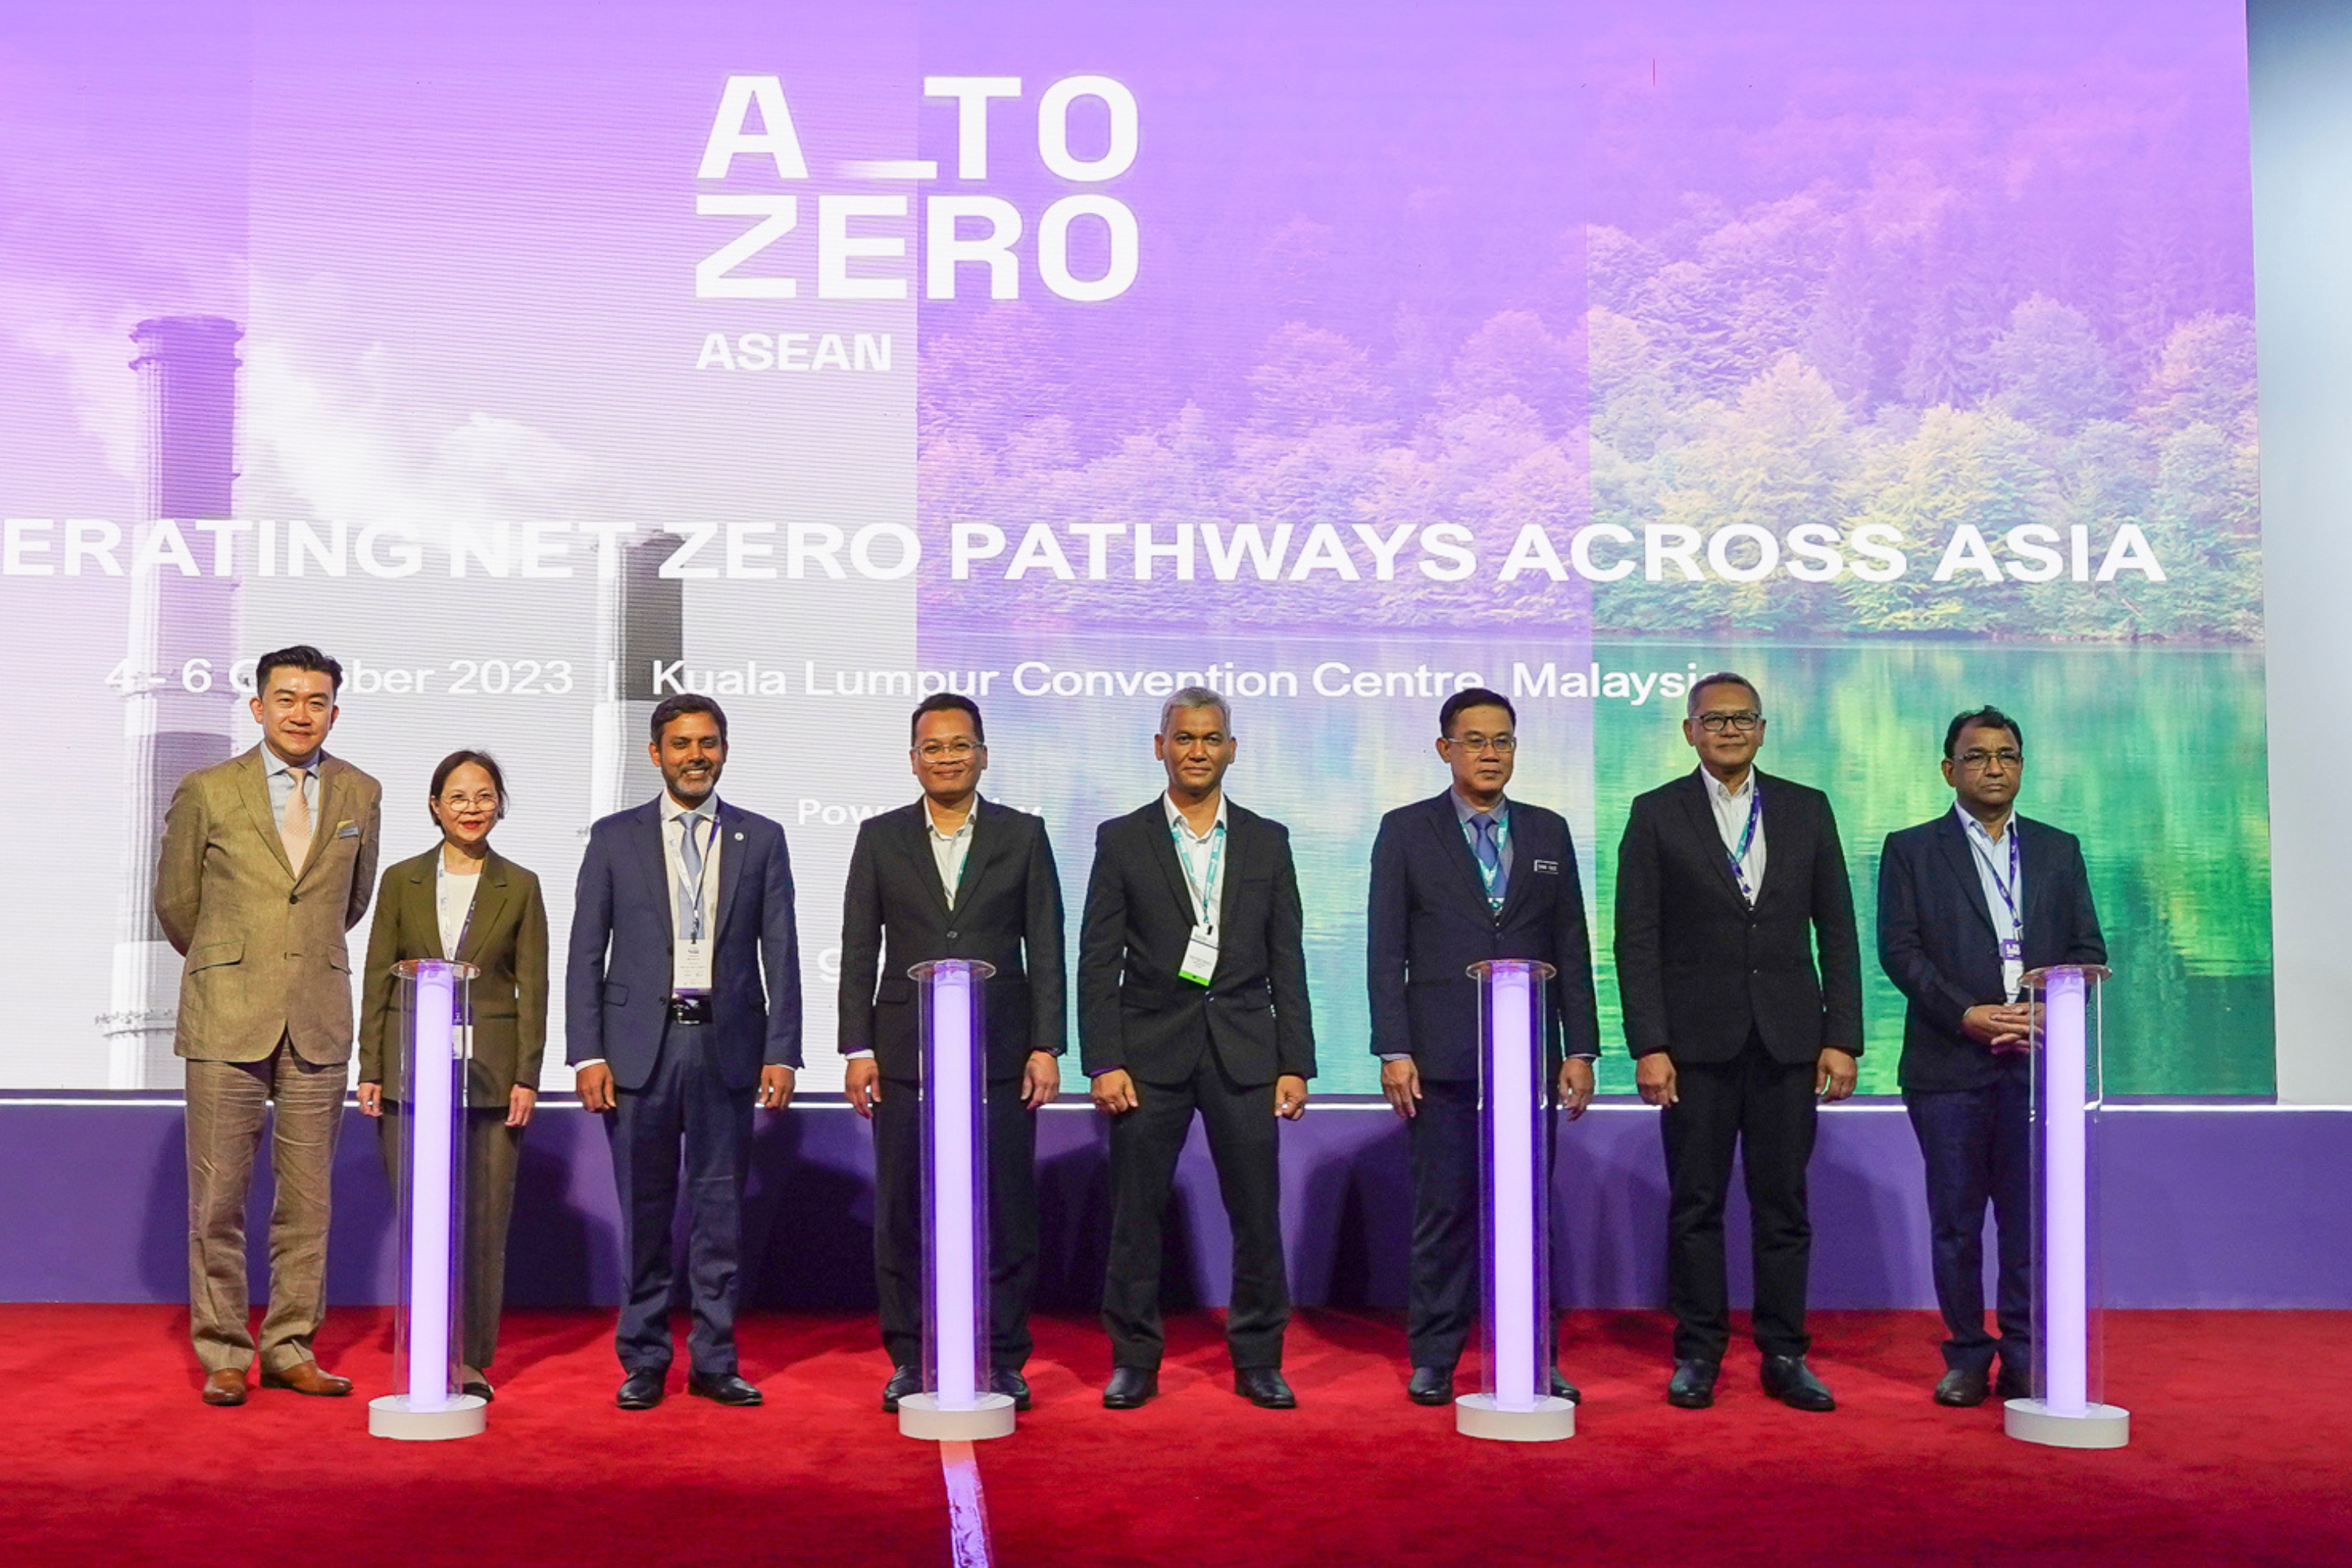 ATOZERO ASEAN 2023, THE GATEWAY TO MULTI-BILLION DOLLAR NET ZERO TRANSITION PROJECTS IN ASIA, KICKS OFF AT IGEM